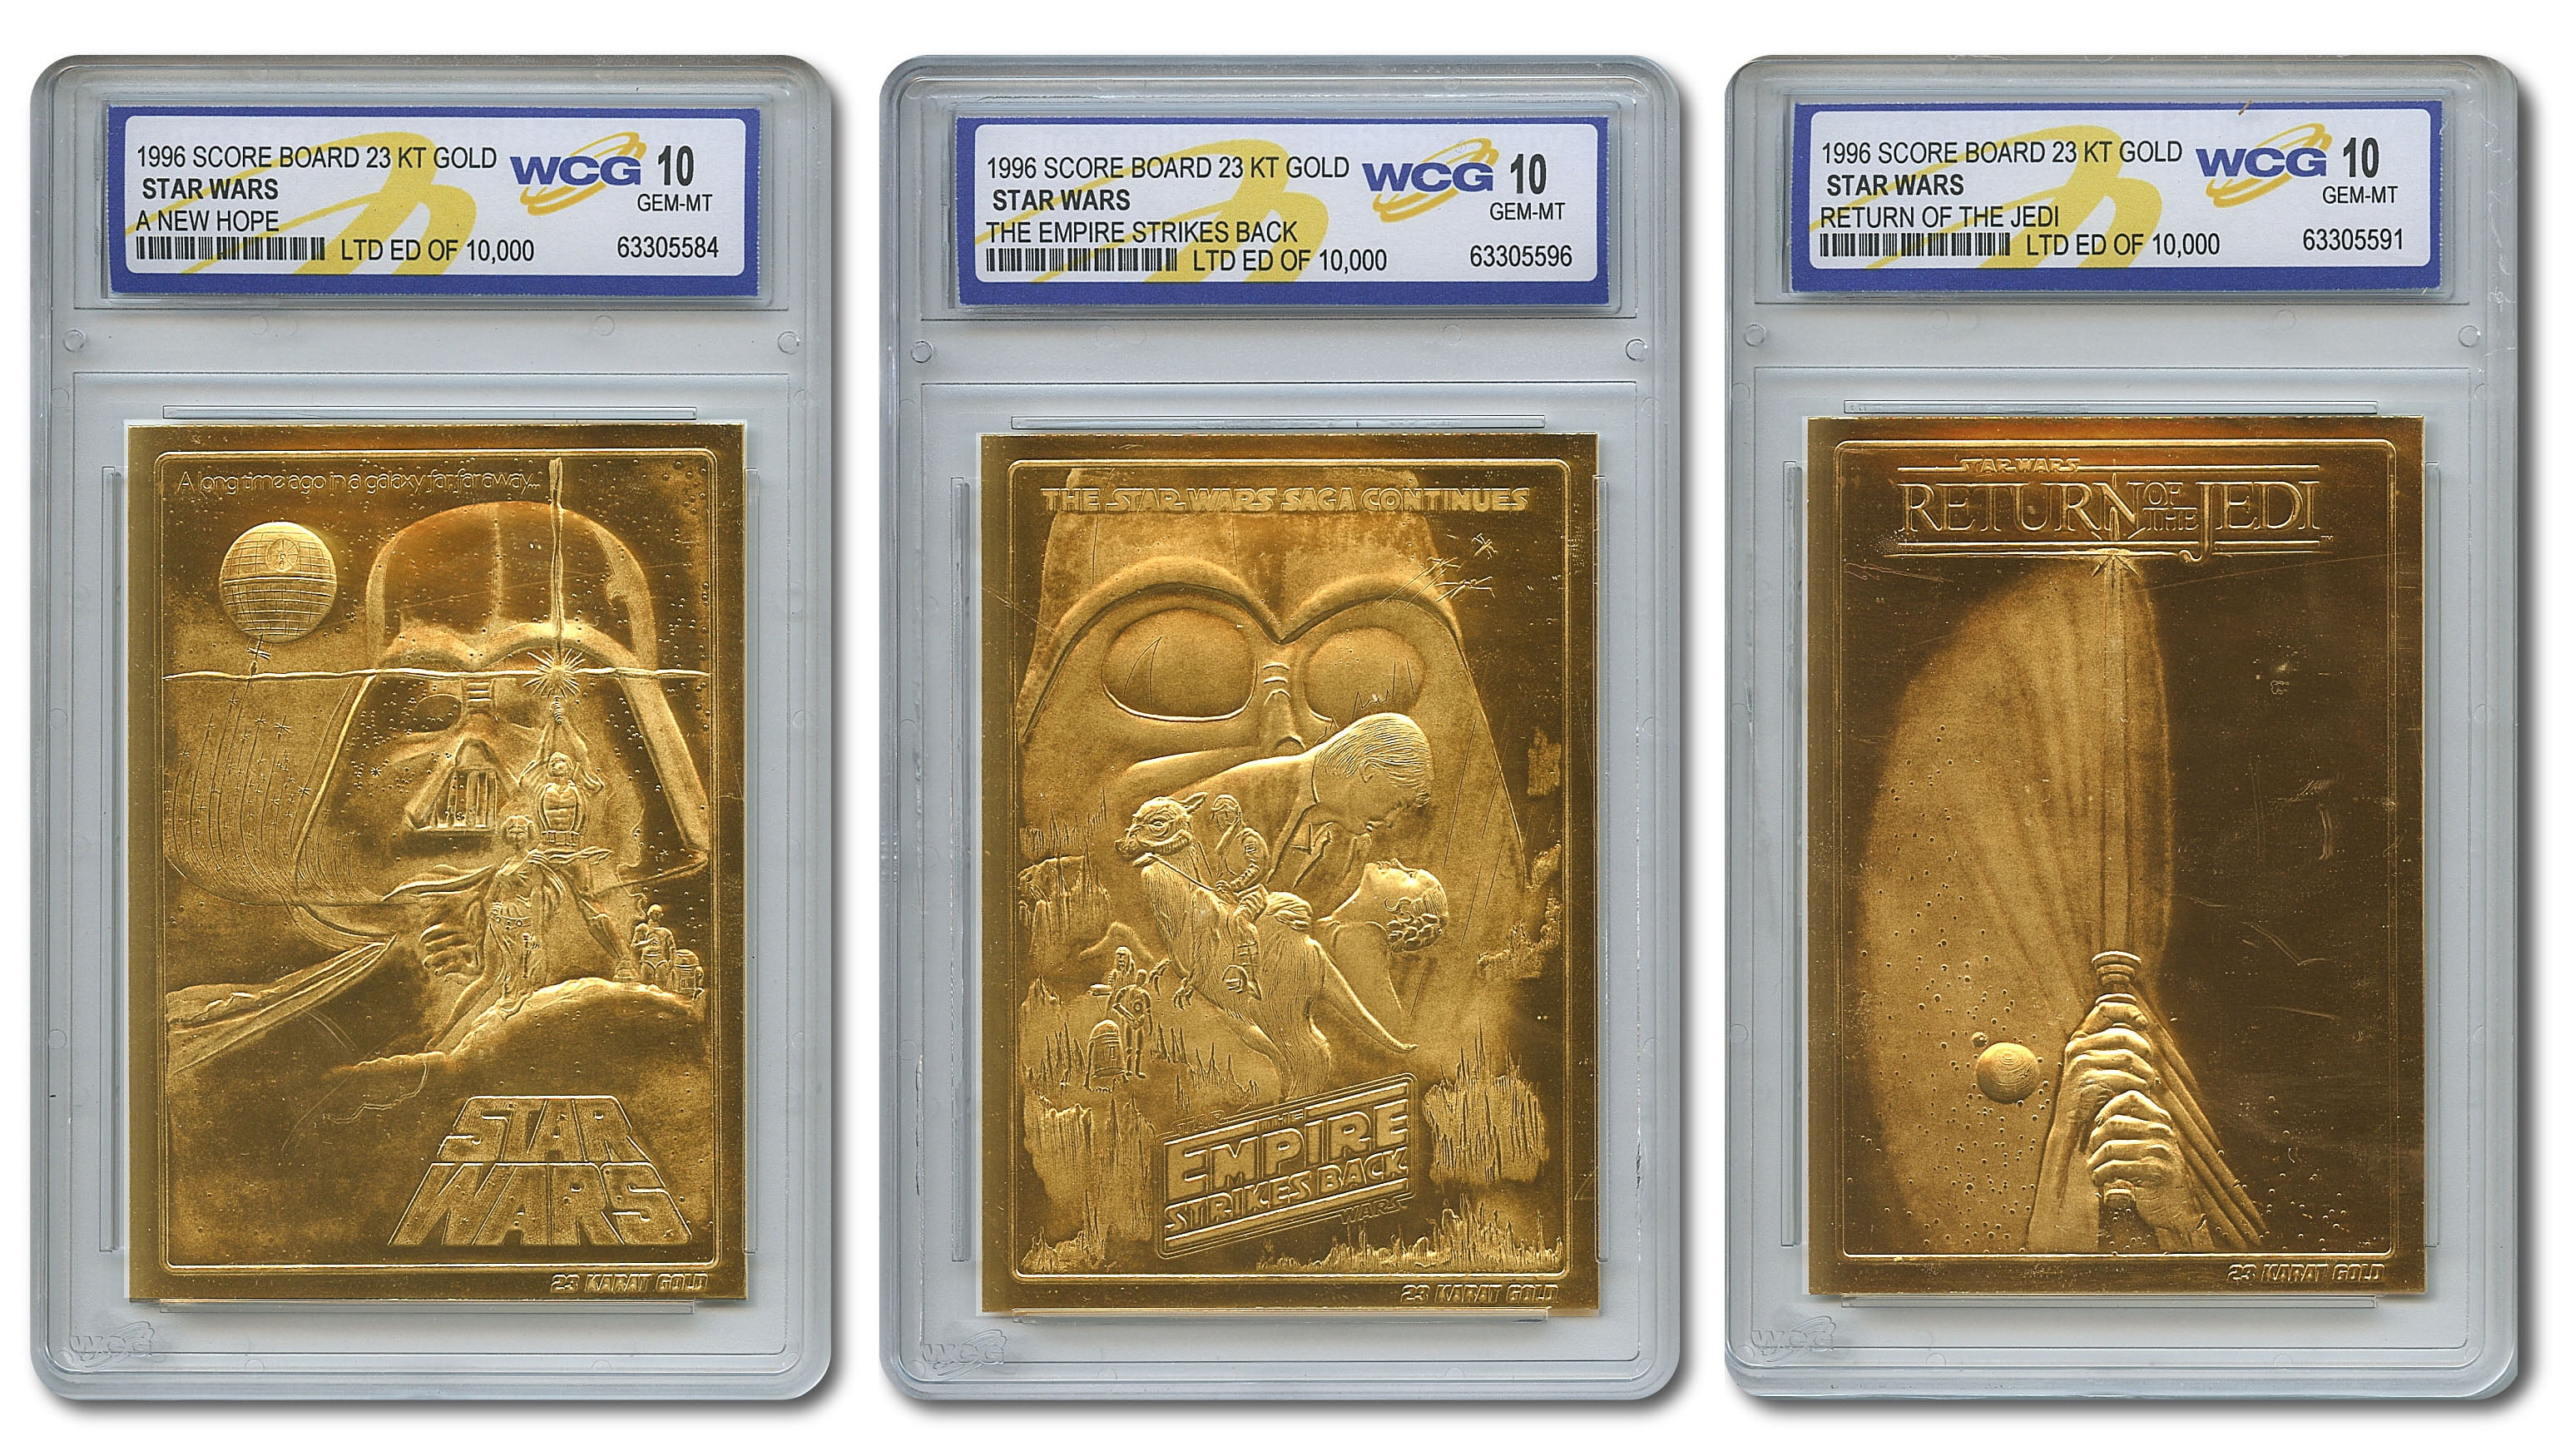 Star Wars MILLENNIUM FALCON 23KT Gold Card Limited Edition #/10,000 BOGO * 